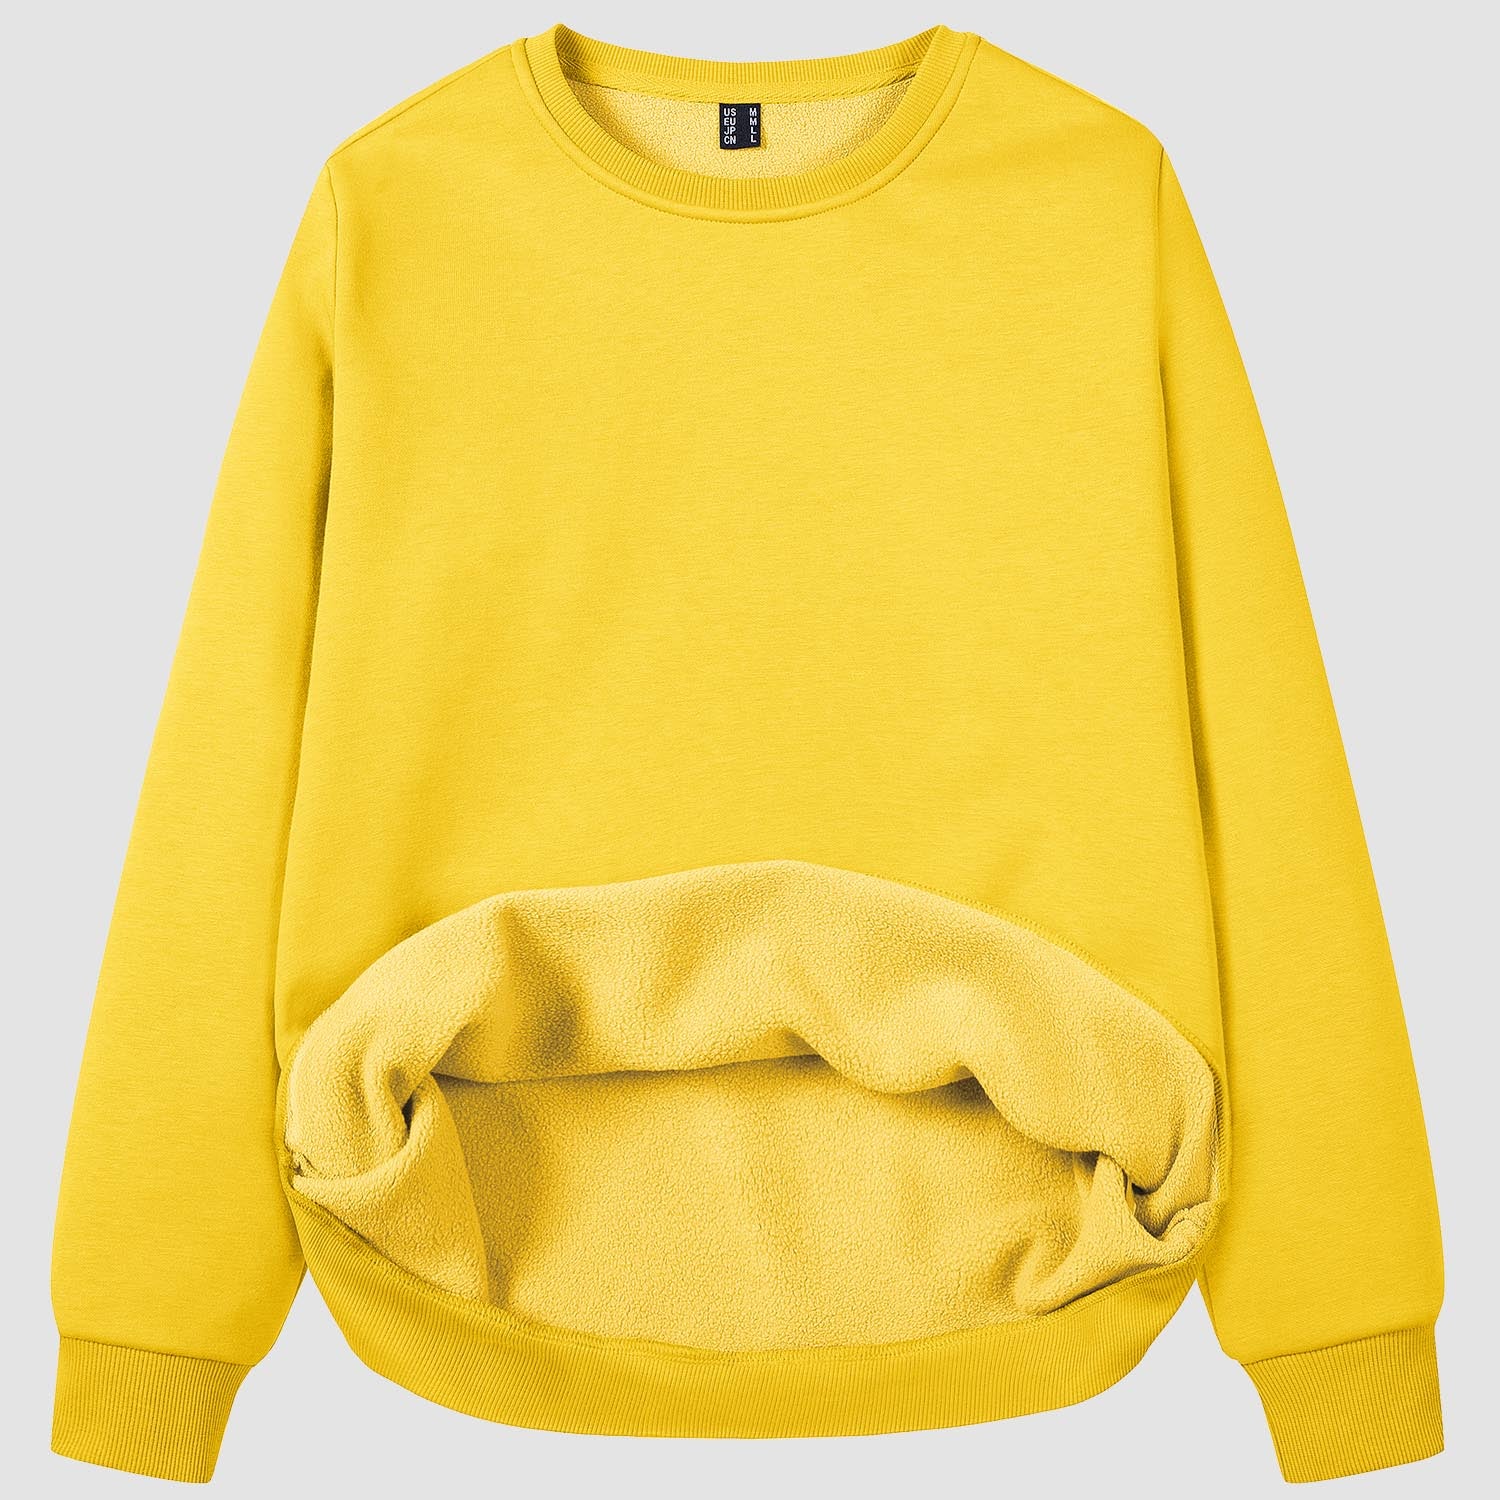 Women's Crewneck Sweatshirt Long Sleeve Casual Warm Fleece Pullover Sweater